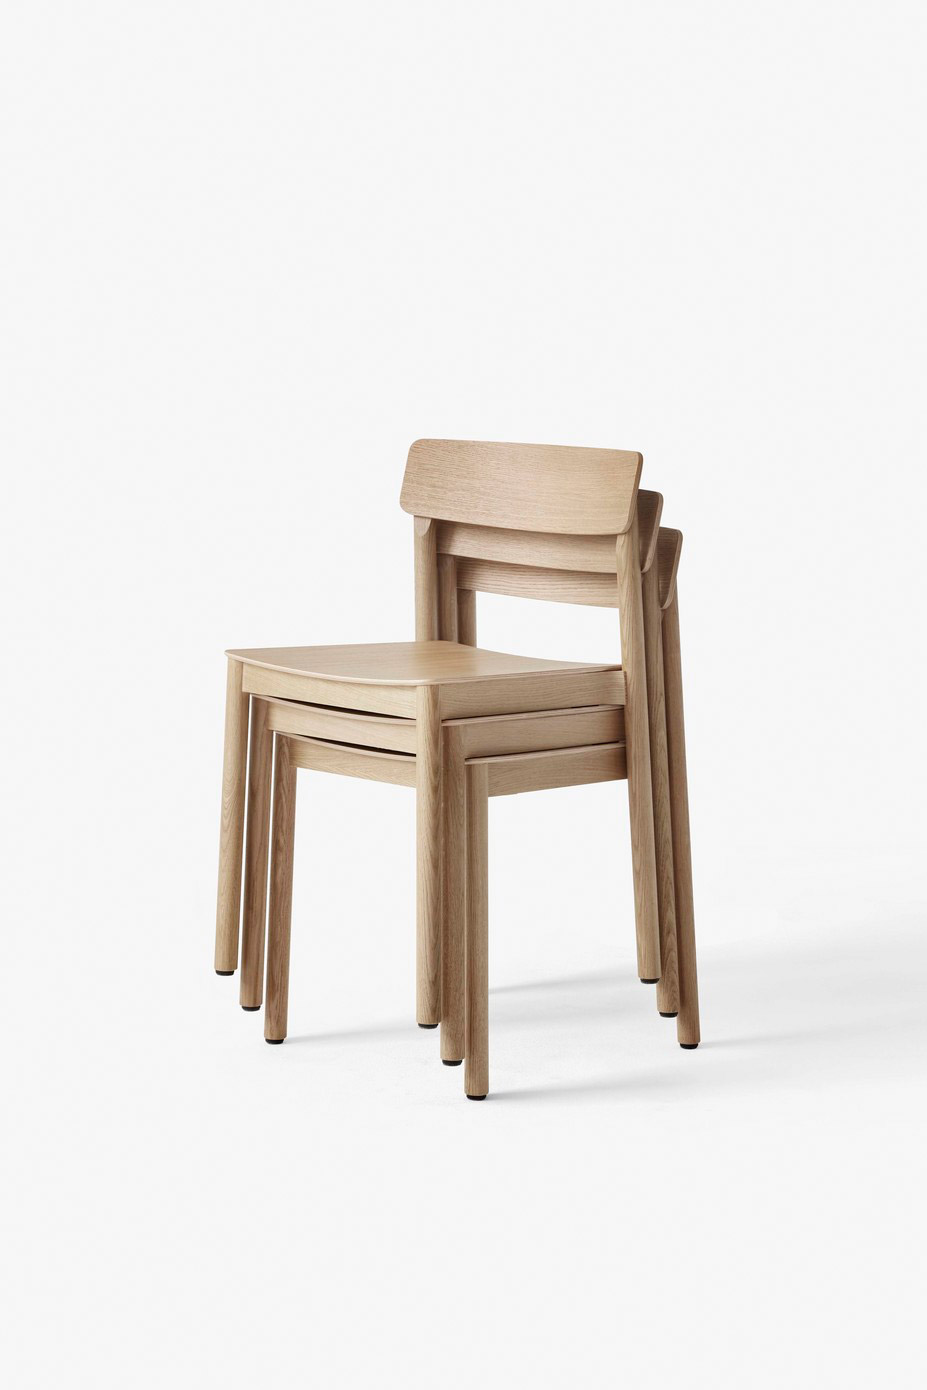 Stacked Betty Chair by Thau & Kallio | Aesence